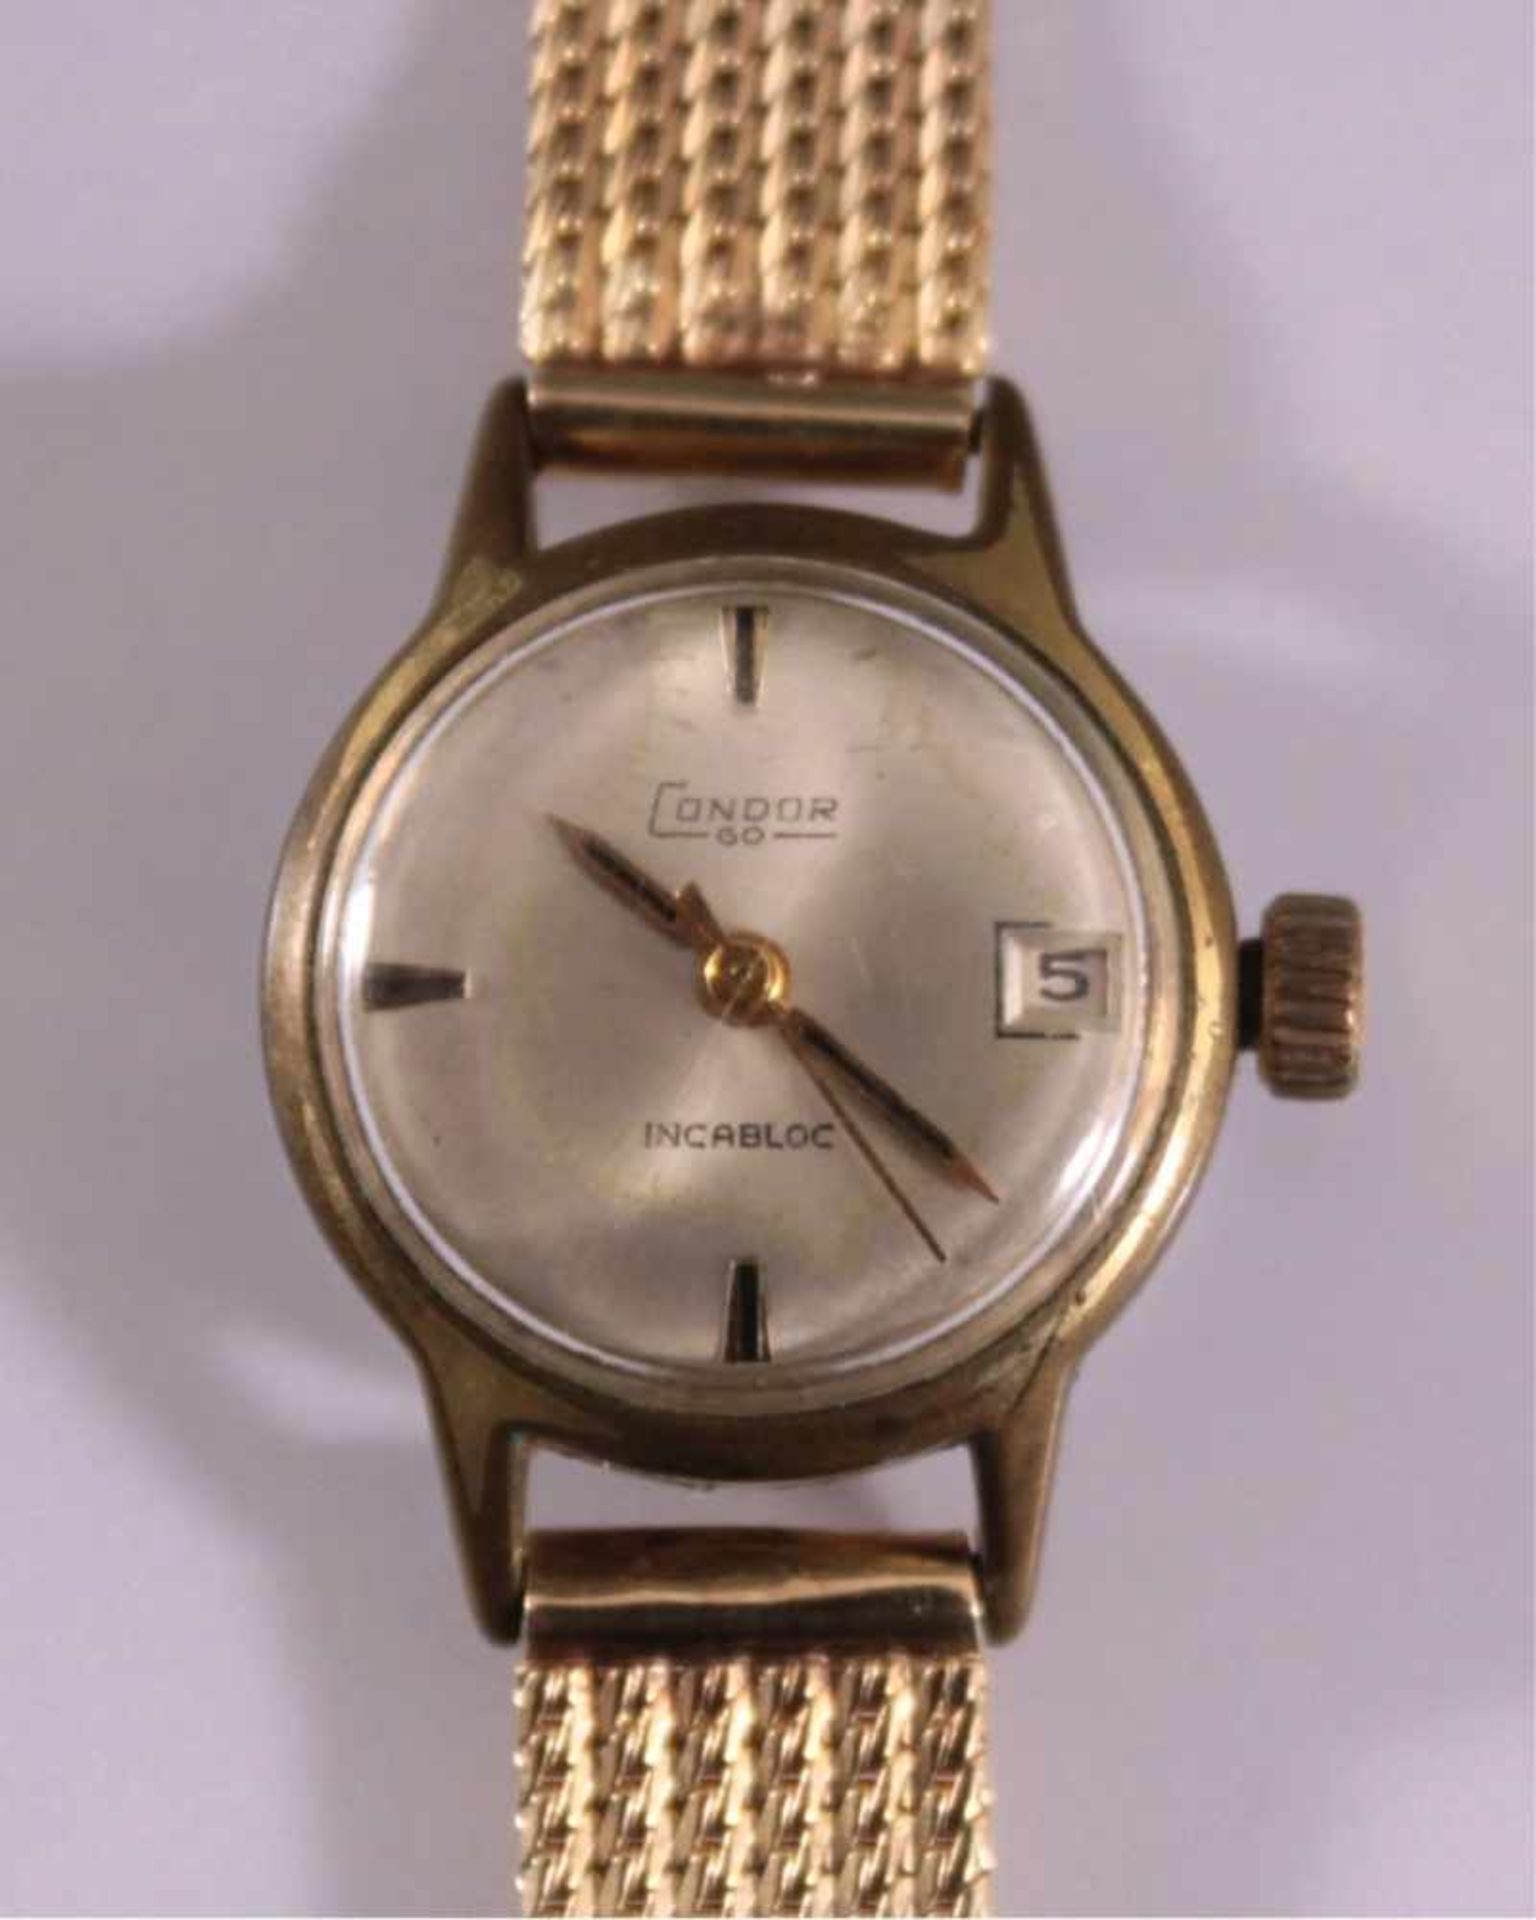 DamenarmbanduhrLondon Incabloc, Uhrwerksgehäuse vergoldet, sehr starkberieben, Funktion geprüft. - Bild 2 aus 6